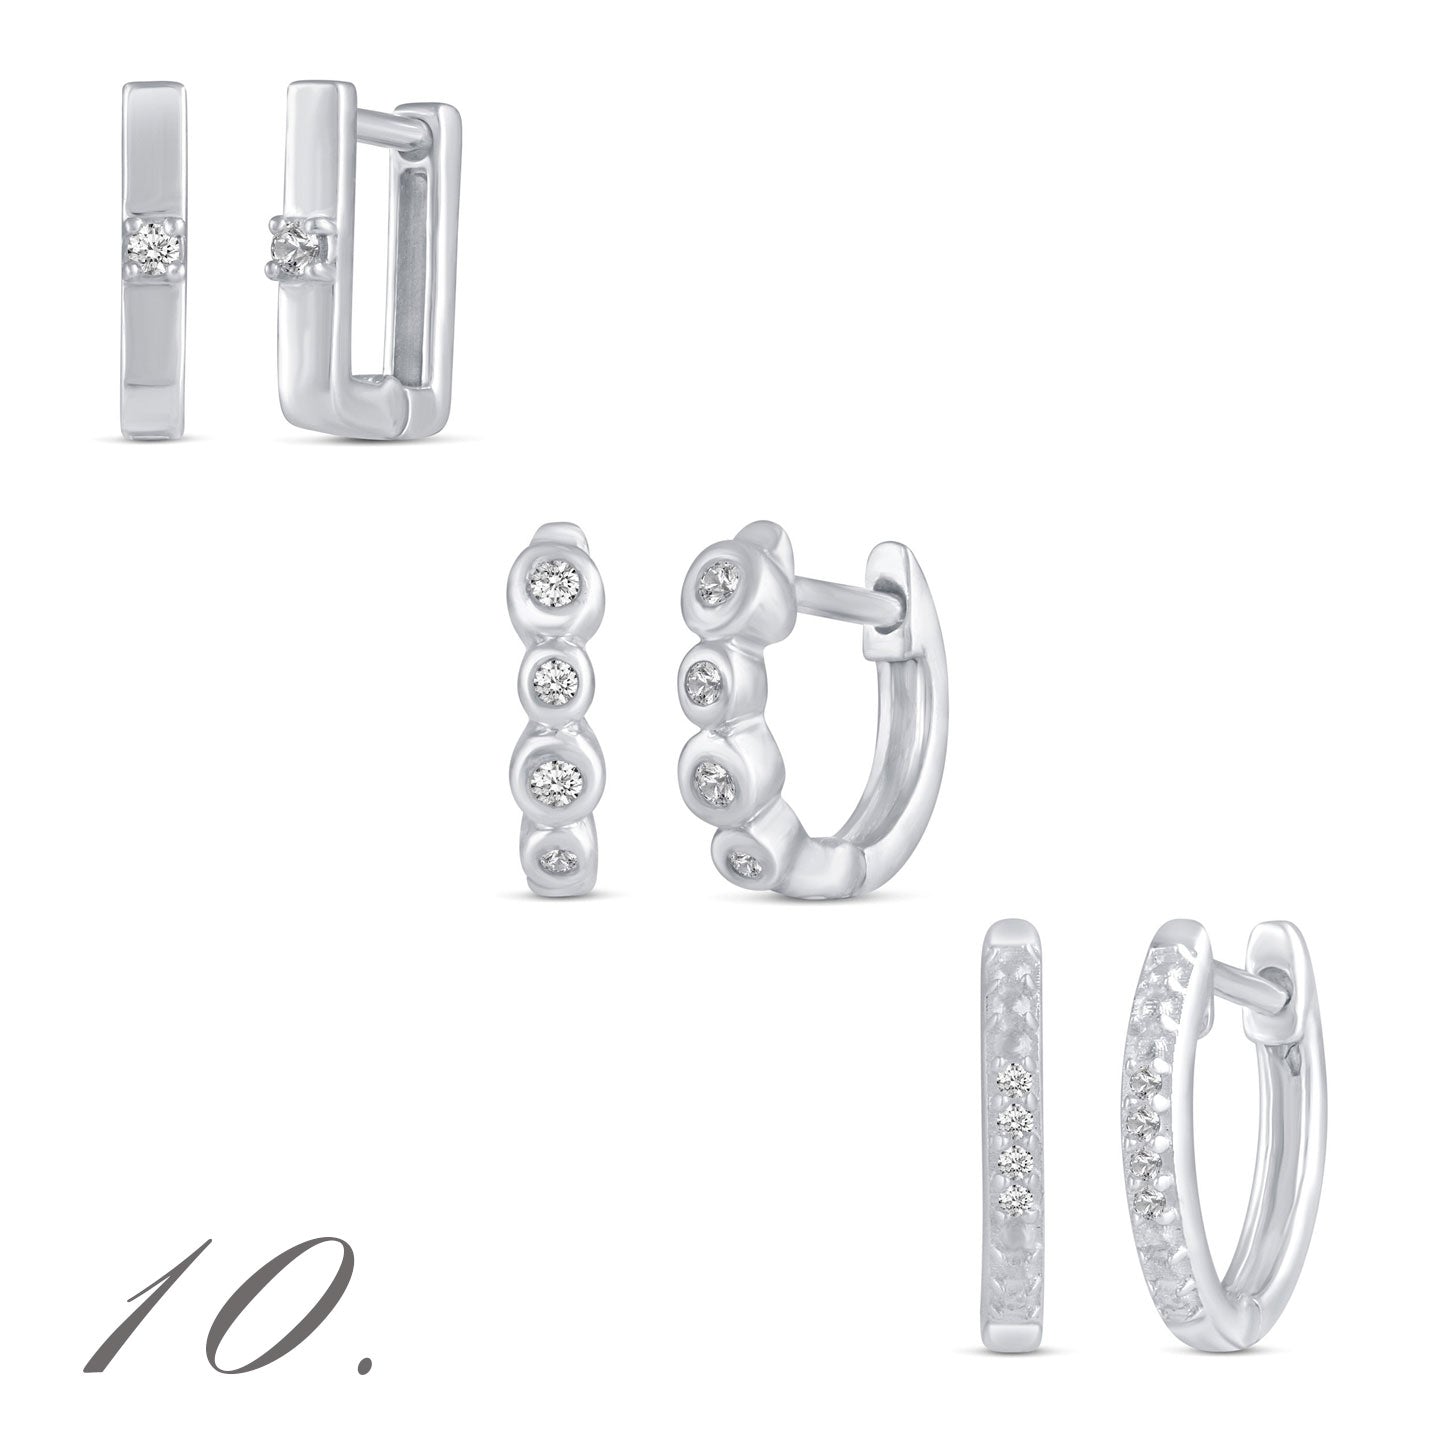 3 Pairs Set Ear Party 1/10 -1/20 Cttw Natural Diamond Earrings in 925 Sterling Silver huggies square hoop